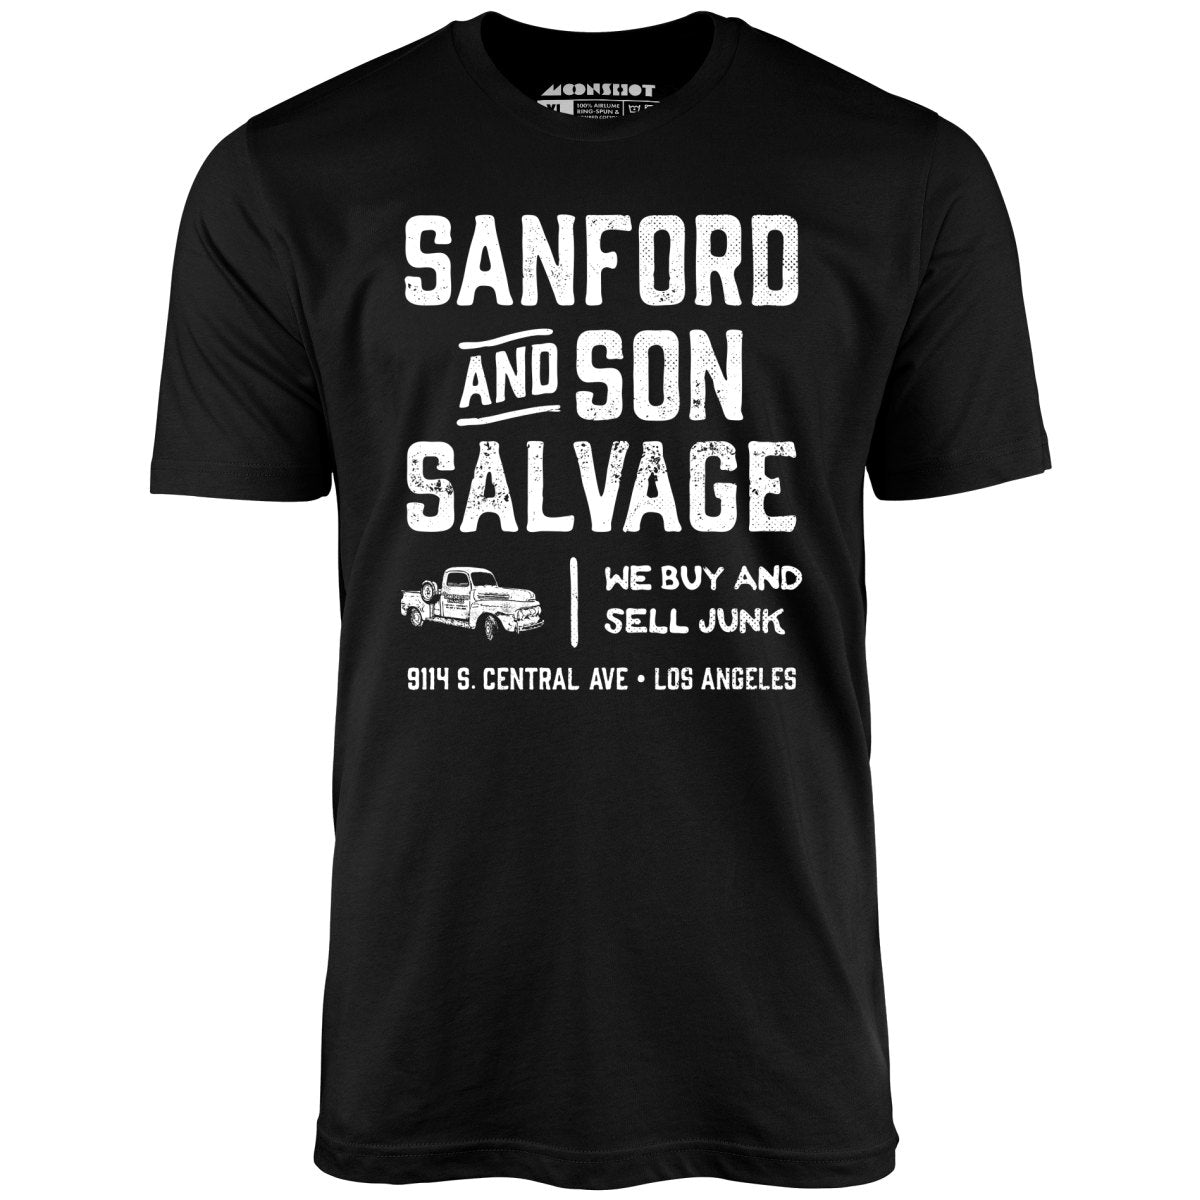 Sanford and Son Salvage - Unisex T-Shirt